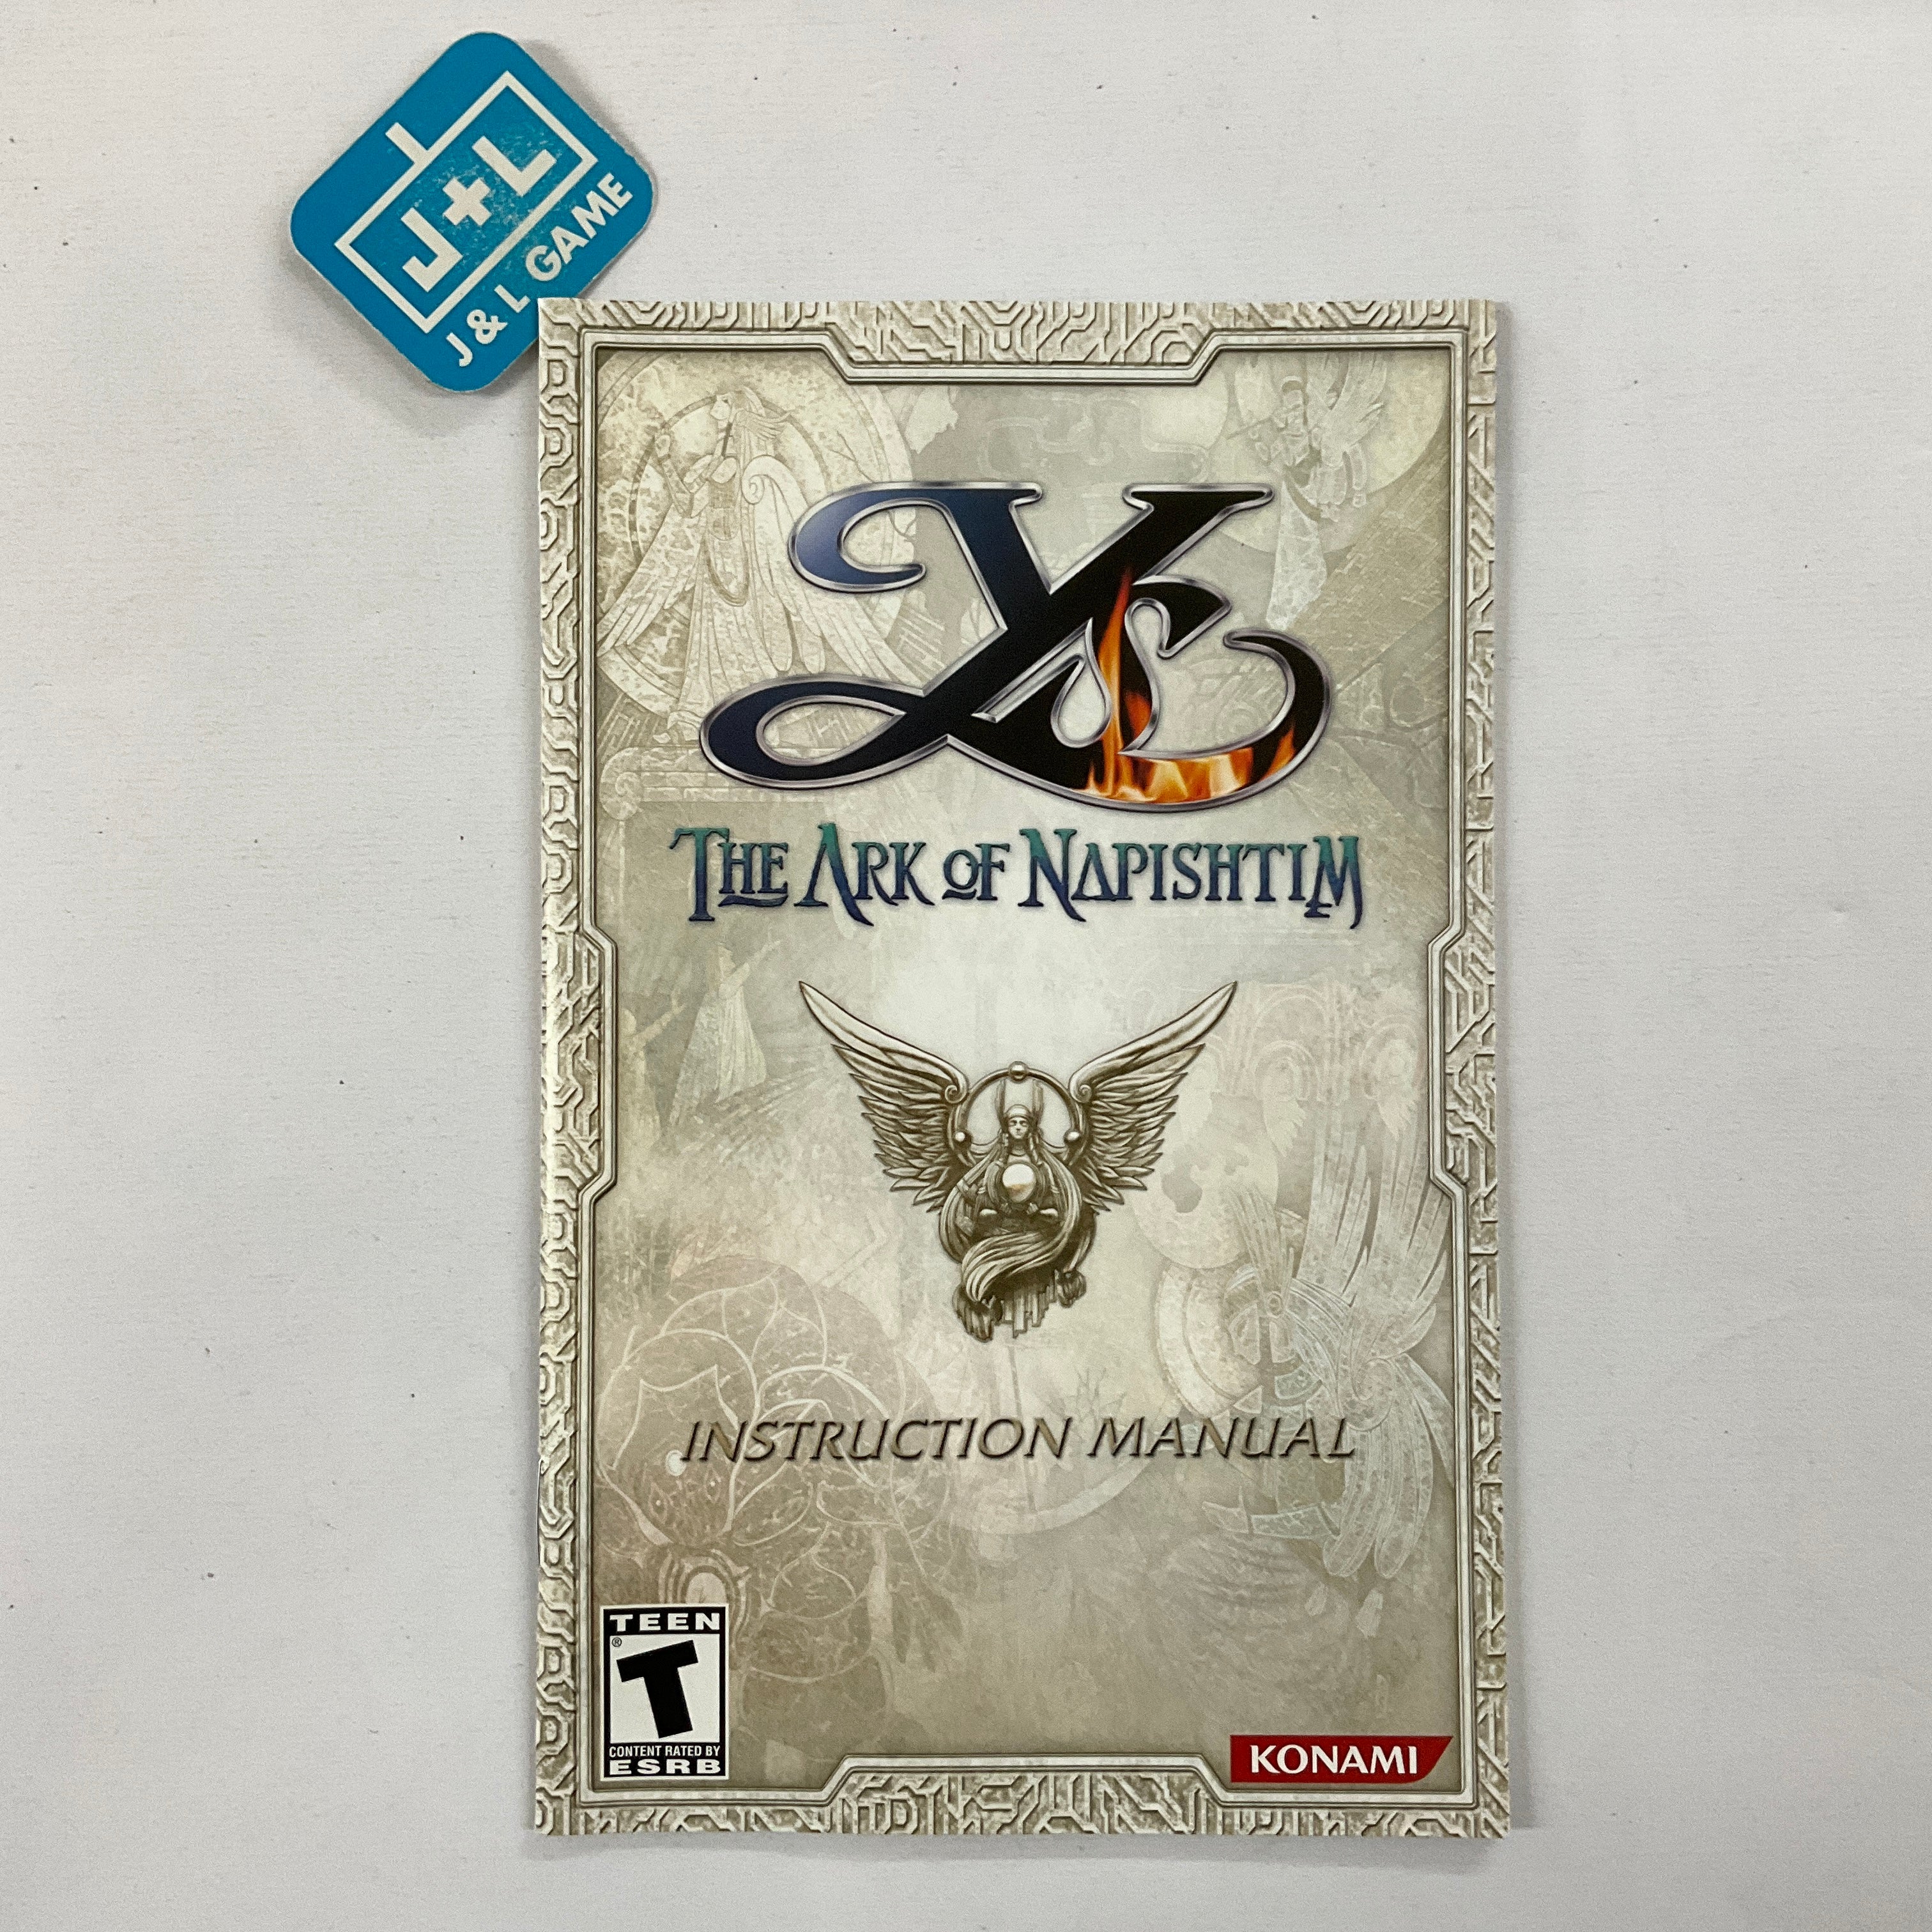 Ys: The Ark of Napishtim - (PS2) PlayStation 2 [Pre-Owned] Video Games Konami   